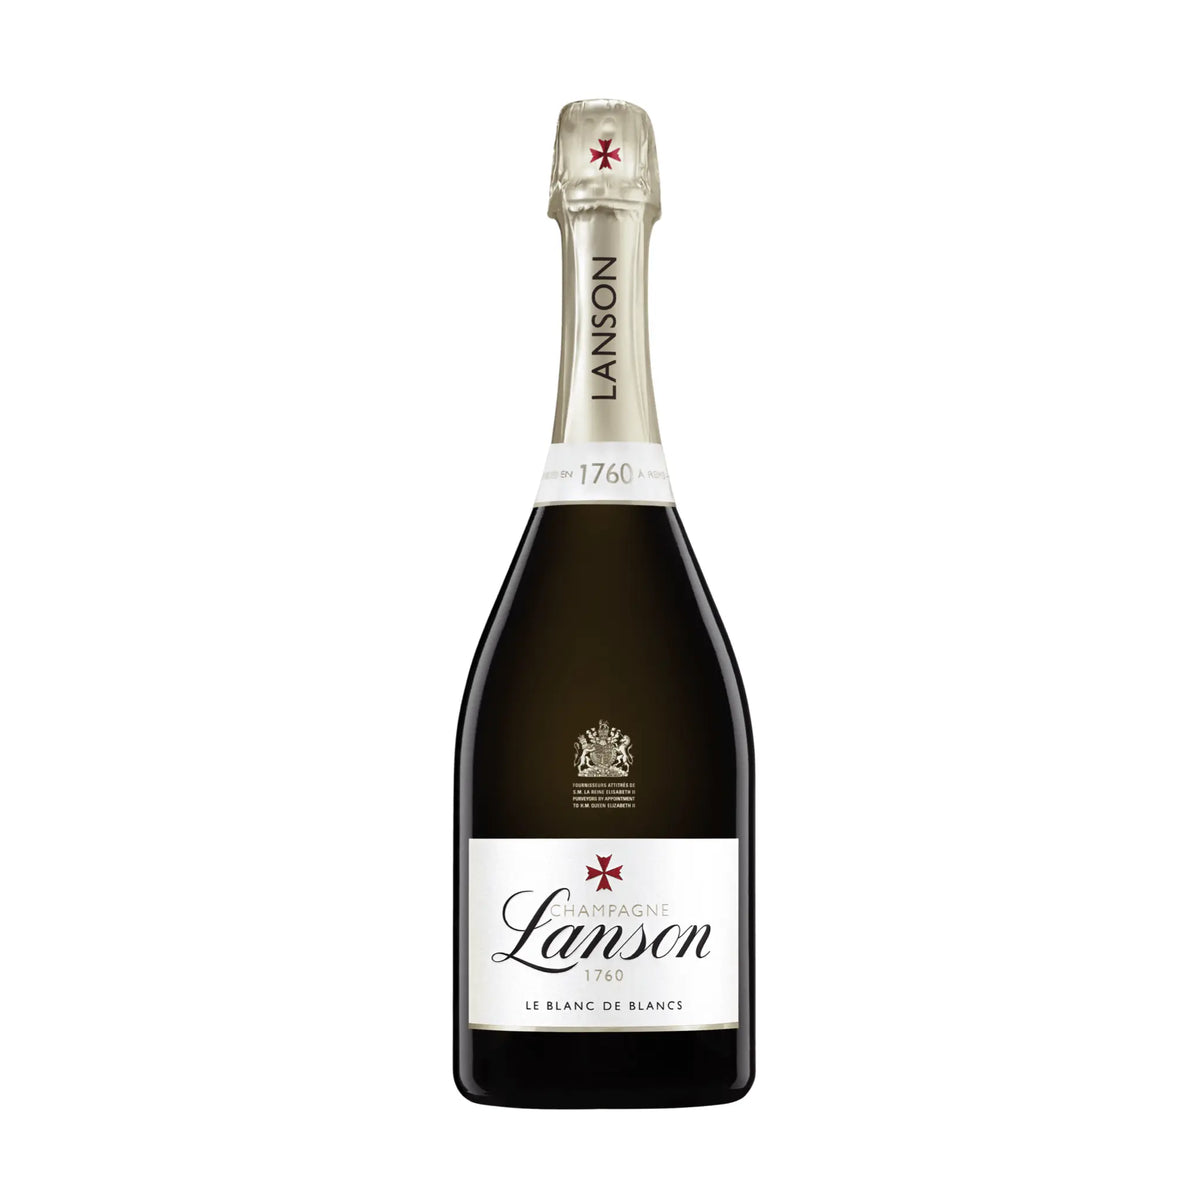 Champagne Lanson-Schaumwein-Champagner-Champagne-Frankreich-Le Blanc de Blancs-WINECOM